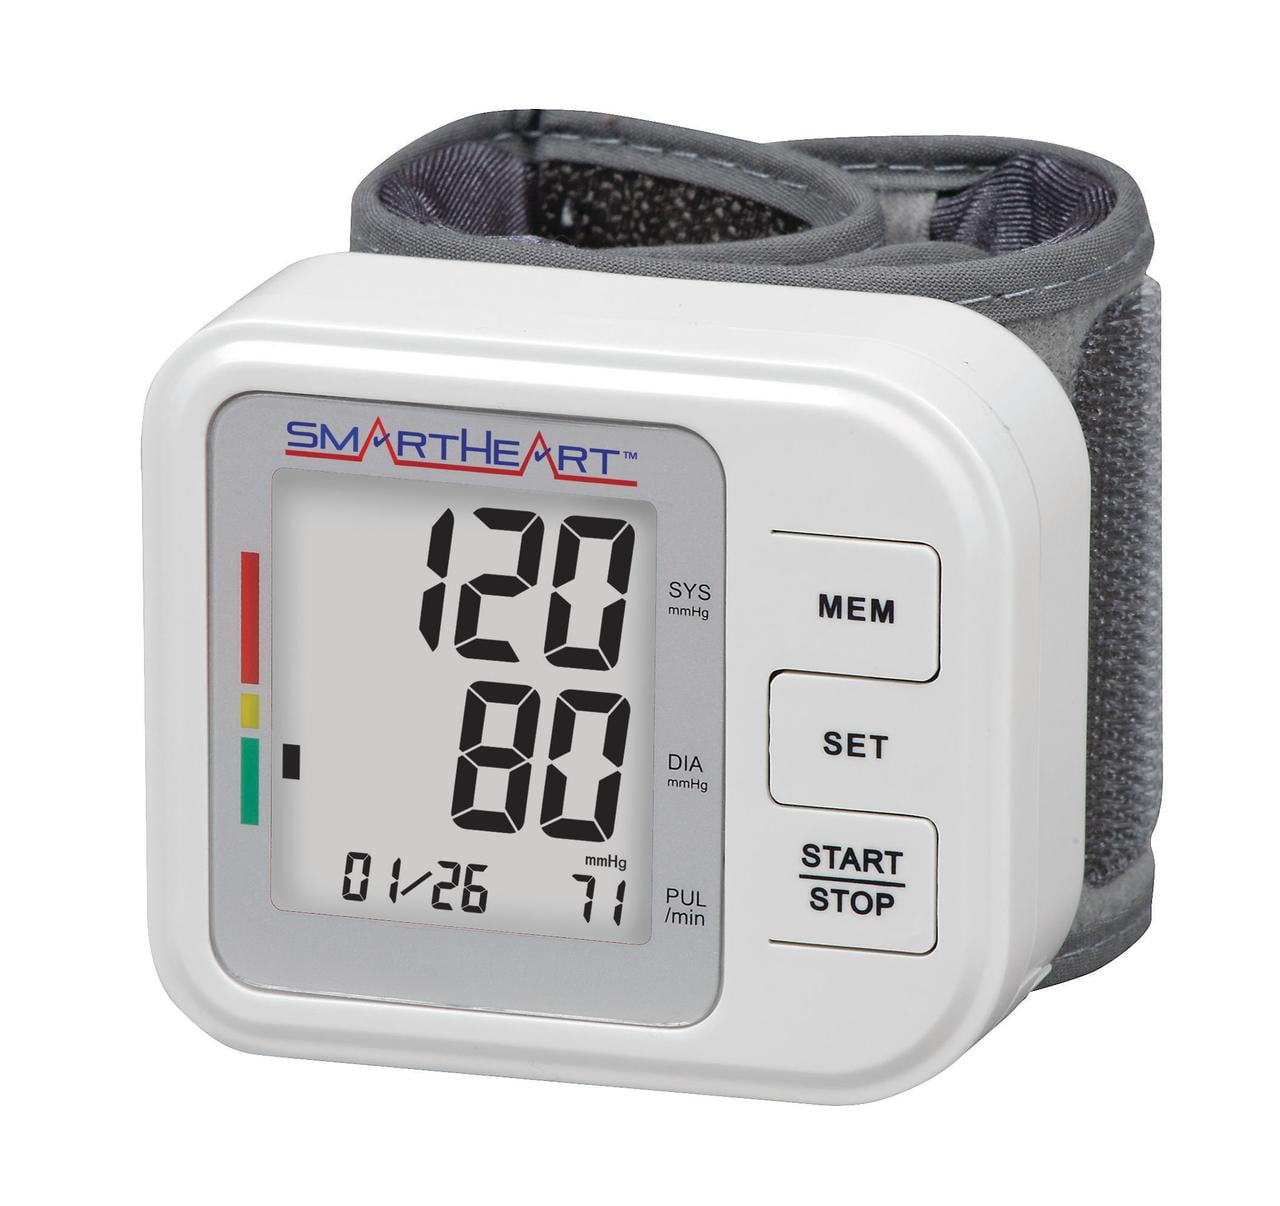 EMI Automatic Wrist Digital Blood Pressure Monitor EBD-282